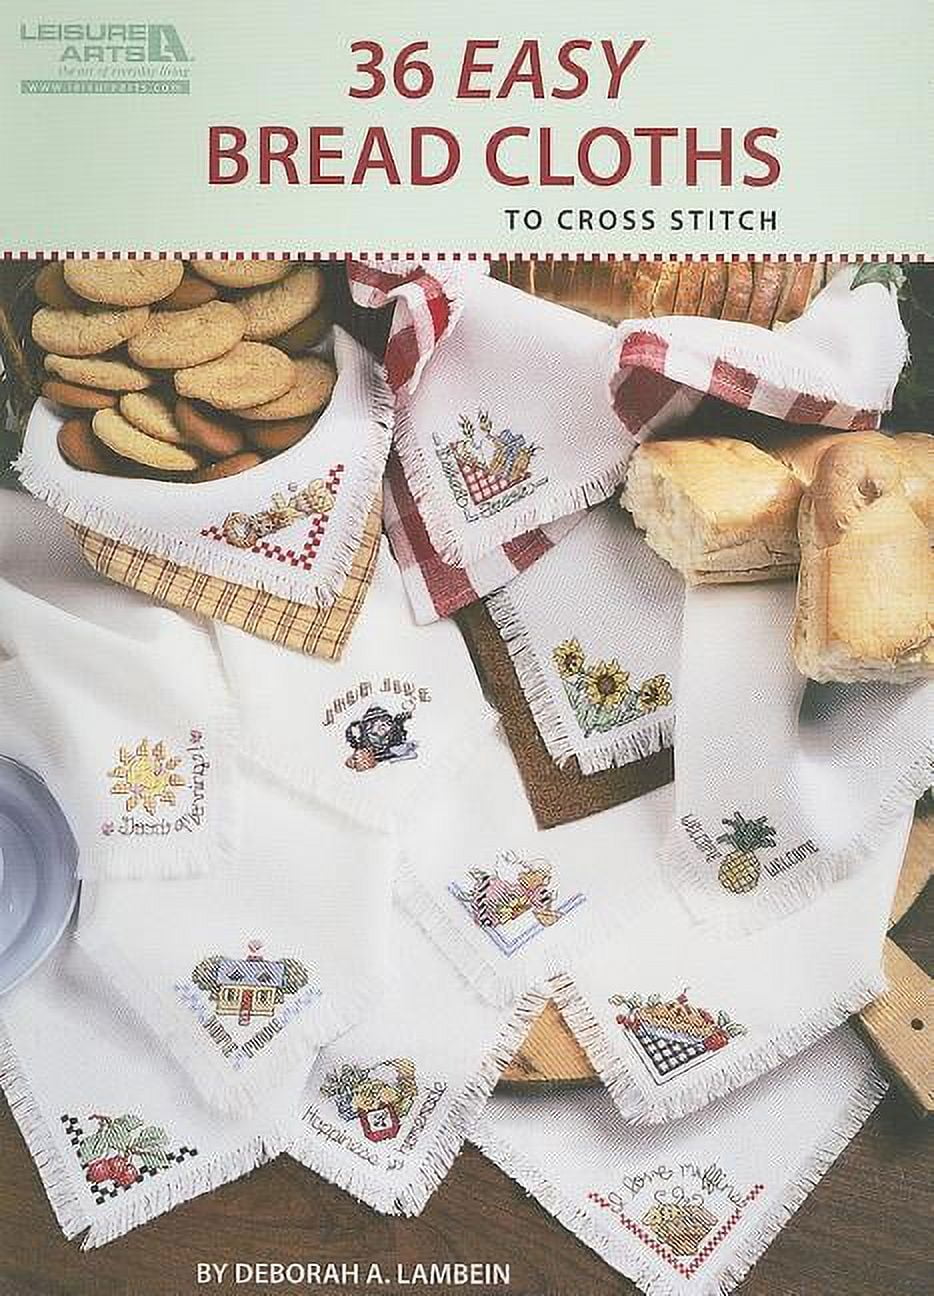 36 Easy Bread Cloths To Cross-Stitch Book by Deborah A. Lambein